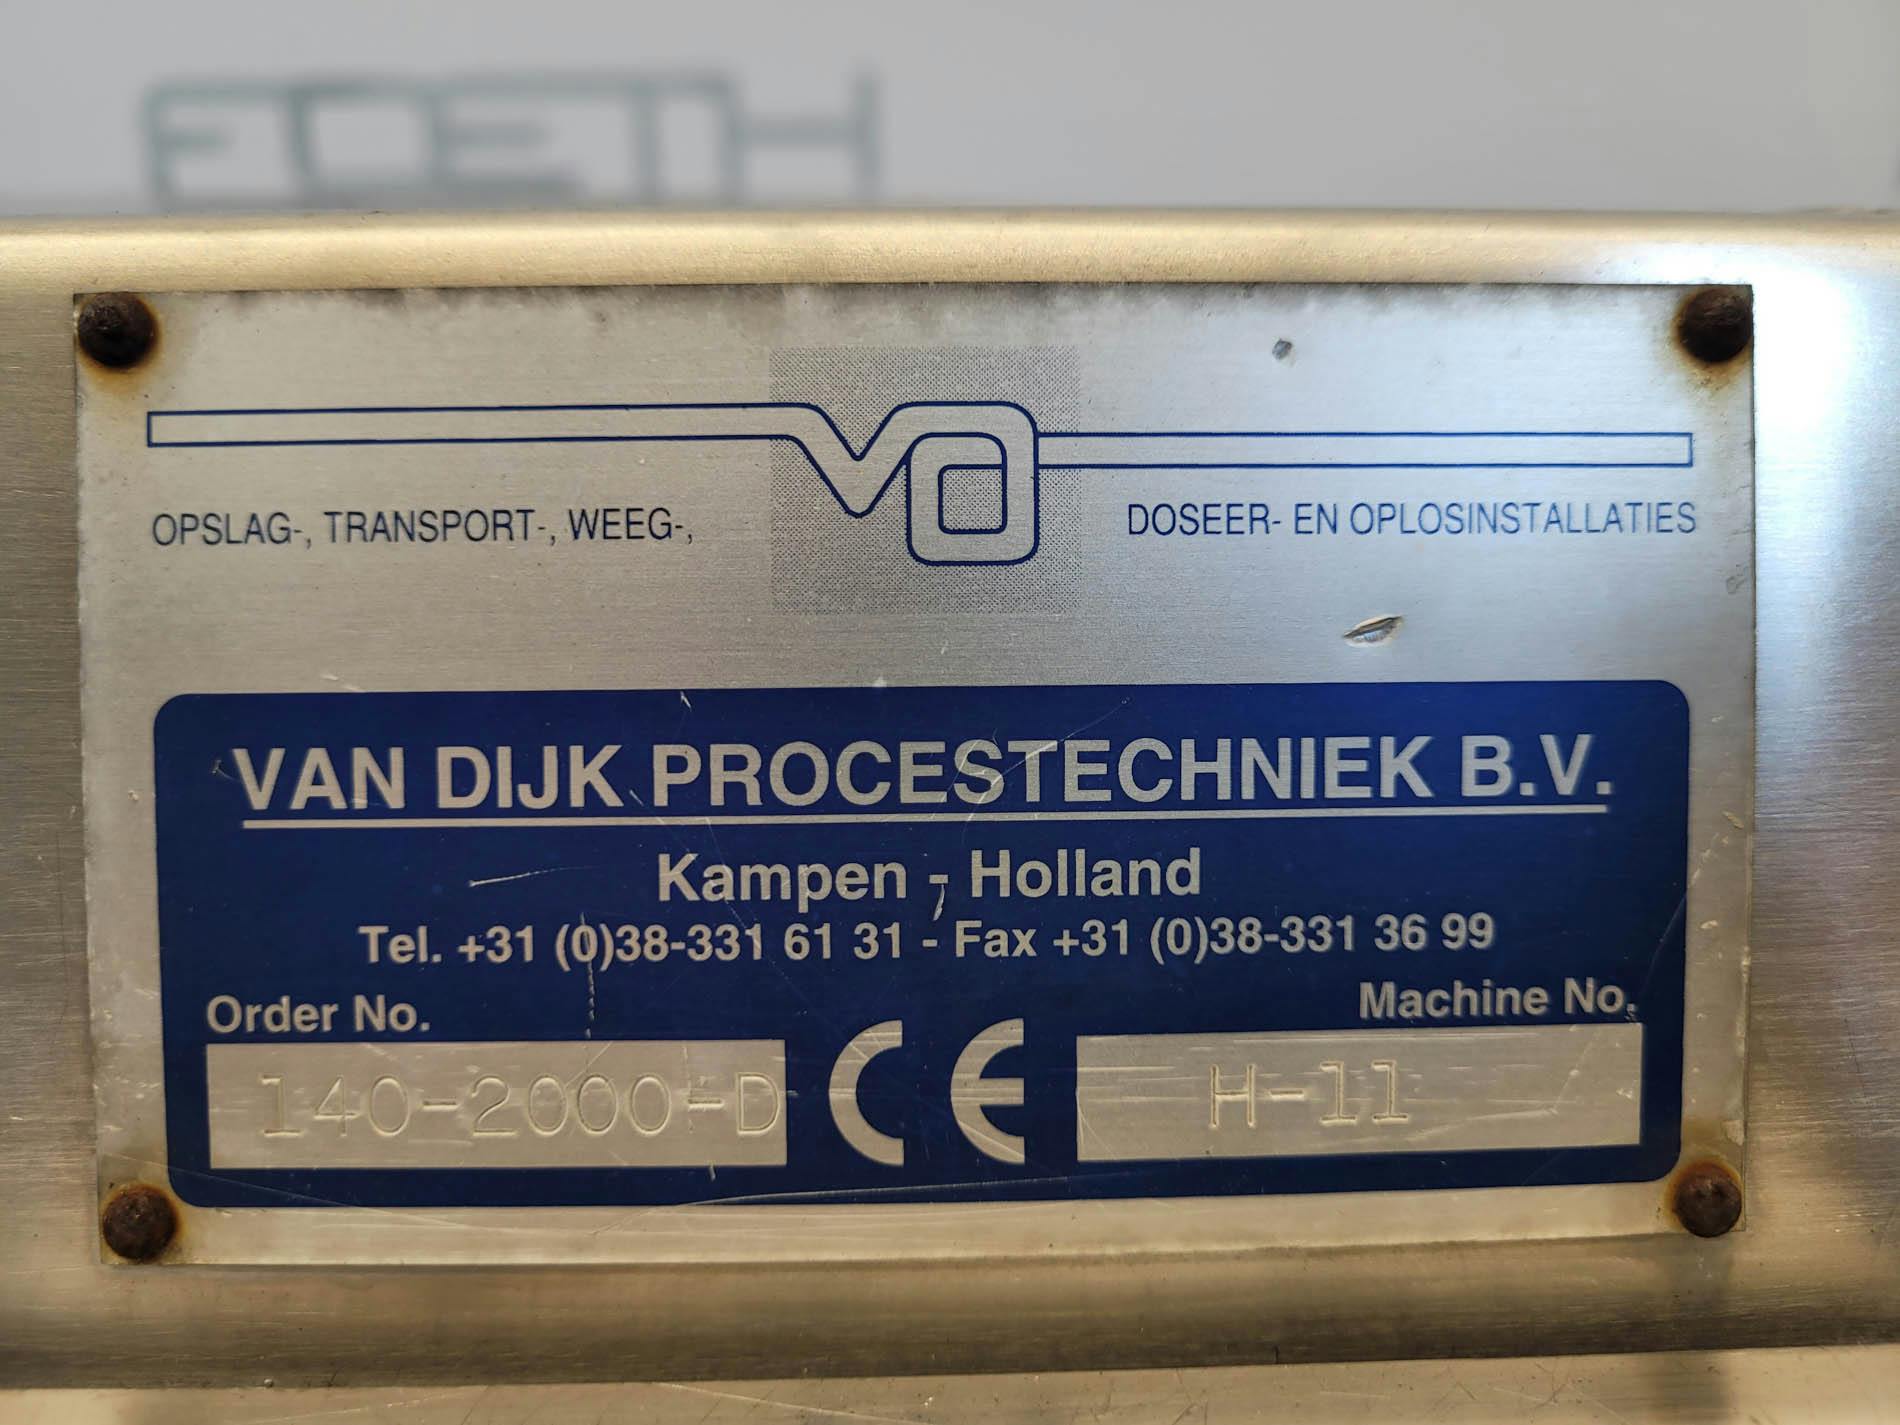 Van Dijk Procestechniek H-11 - Estación de descarga de sacos - image 14